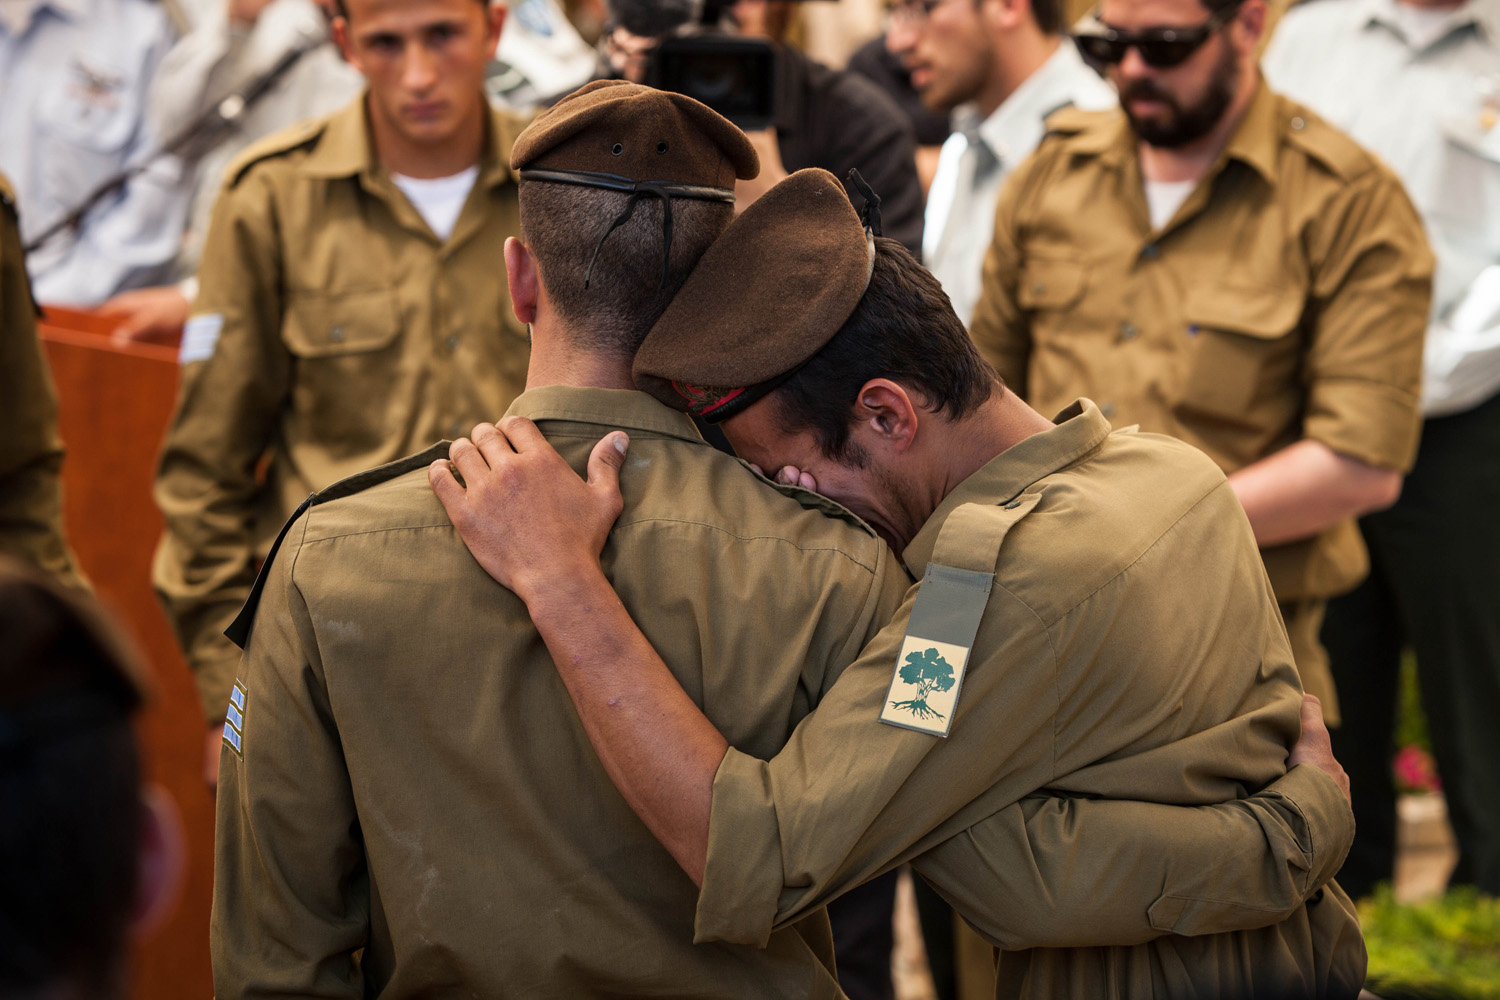 Funeral of Sgt. Max Steinberg, IDF soldier killed by Palestinian militant anti-tank rocket, Mt. Herzl cemetery, Jerusalem, Israel - 23 Jul 2014